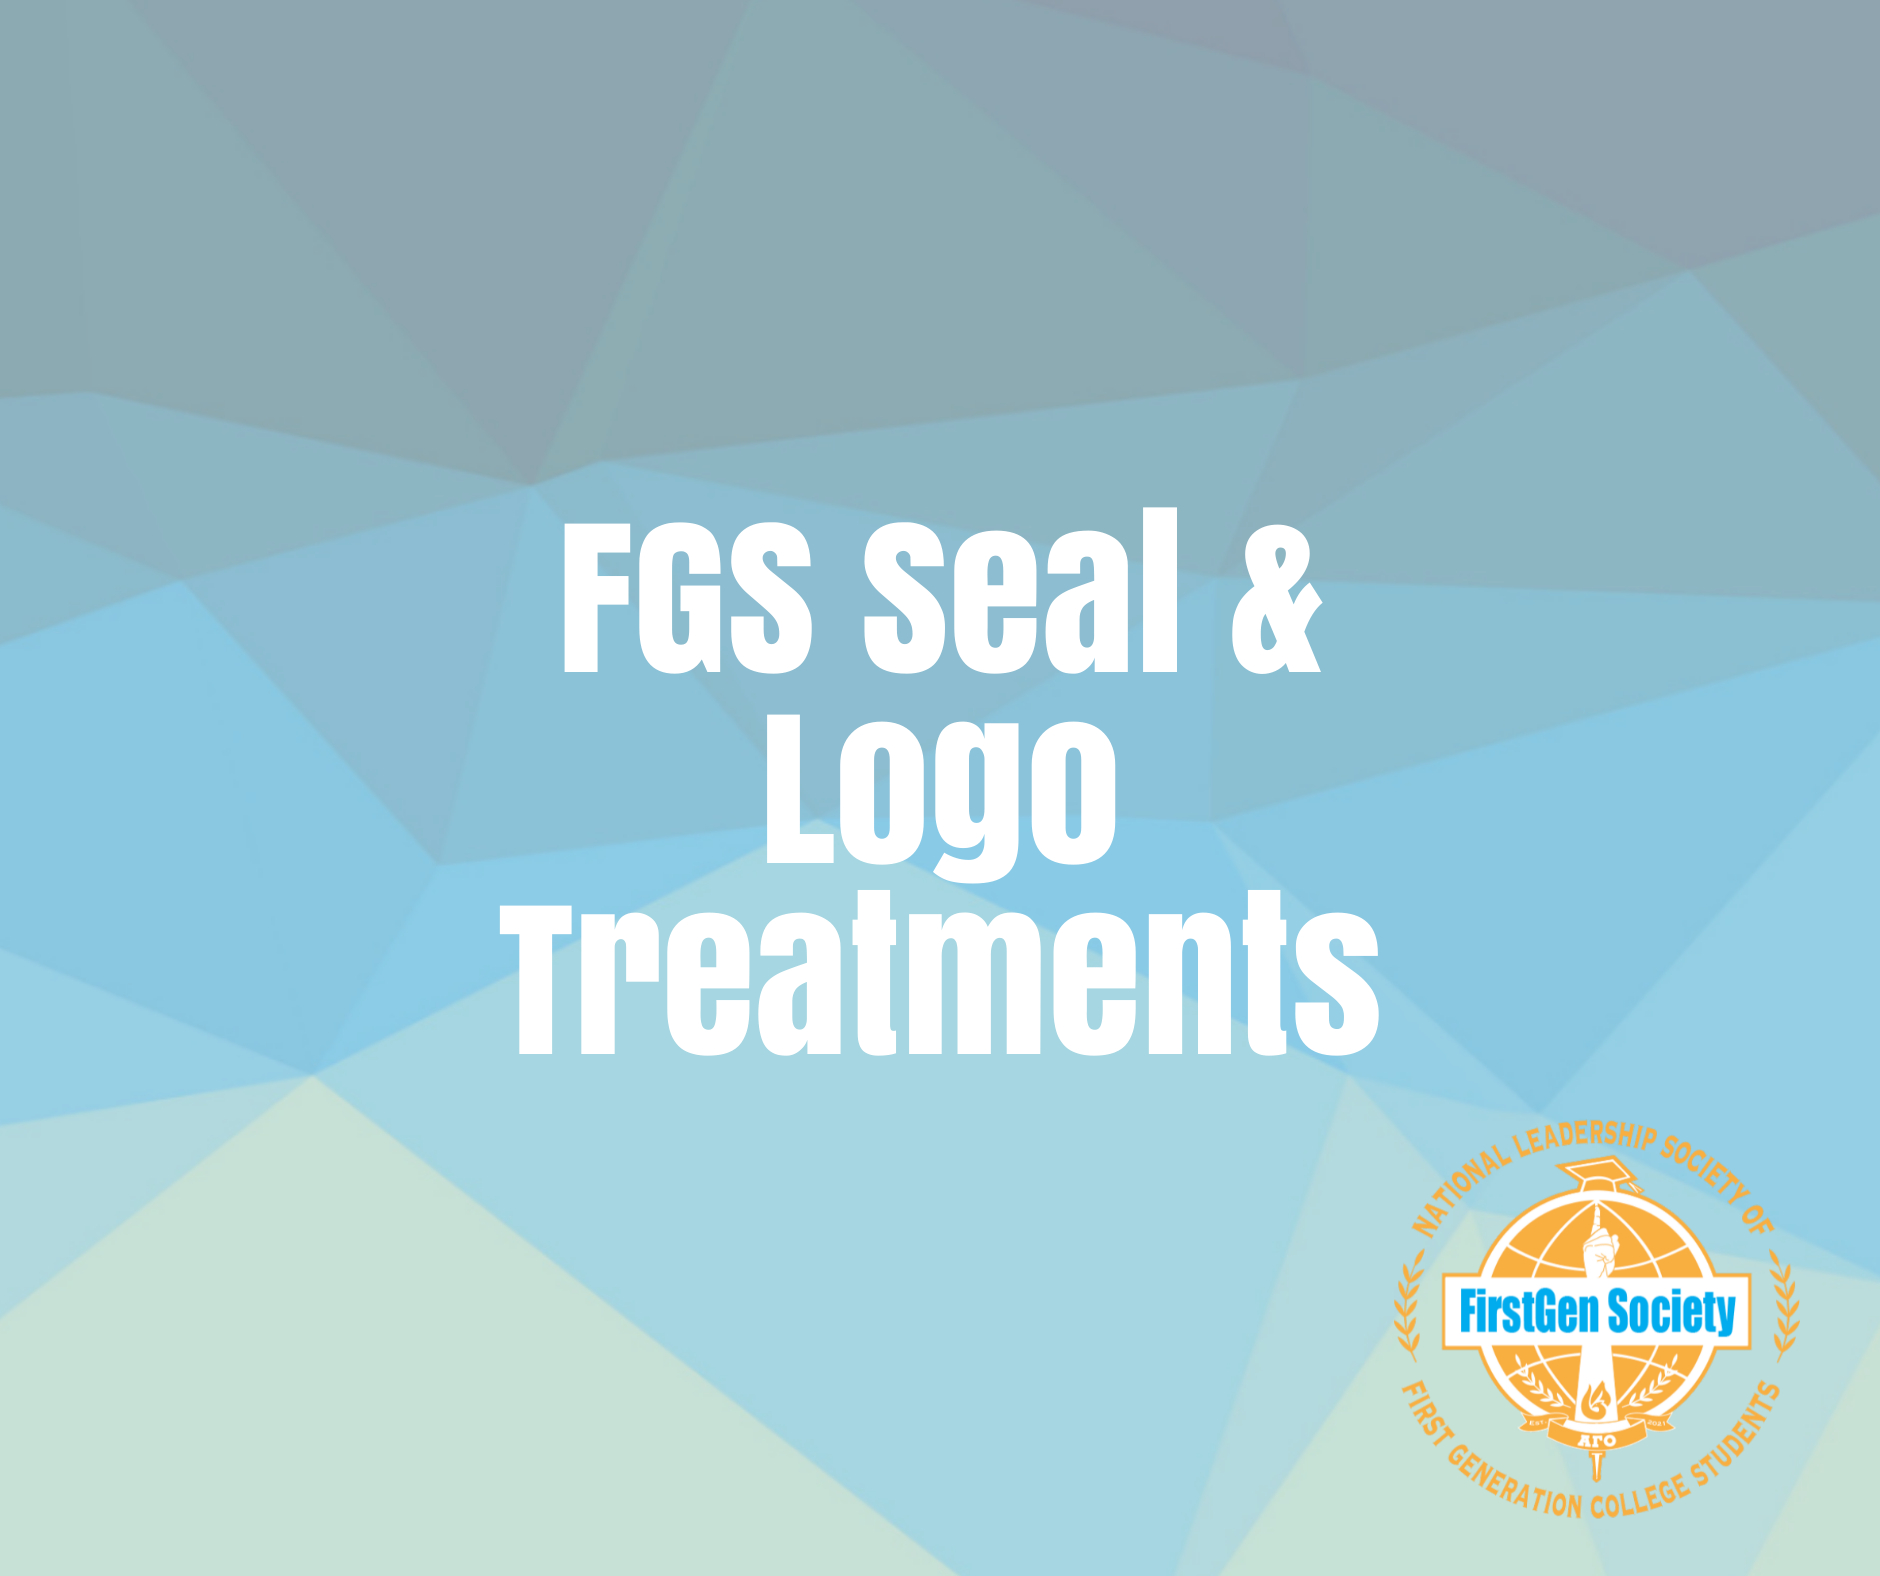    FGS Seal & Logo Treatments   